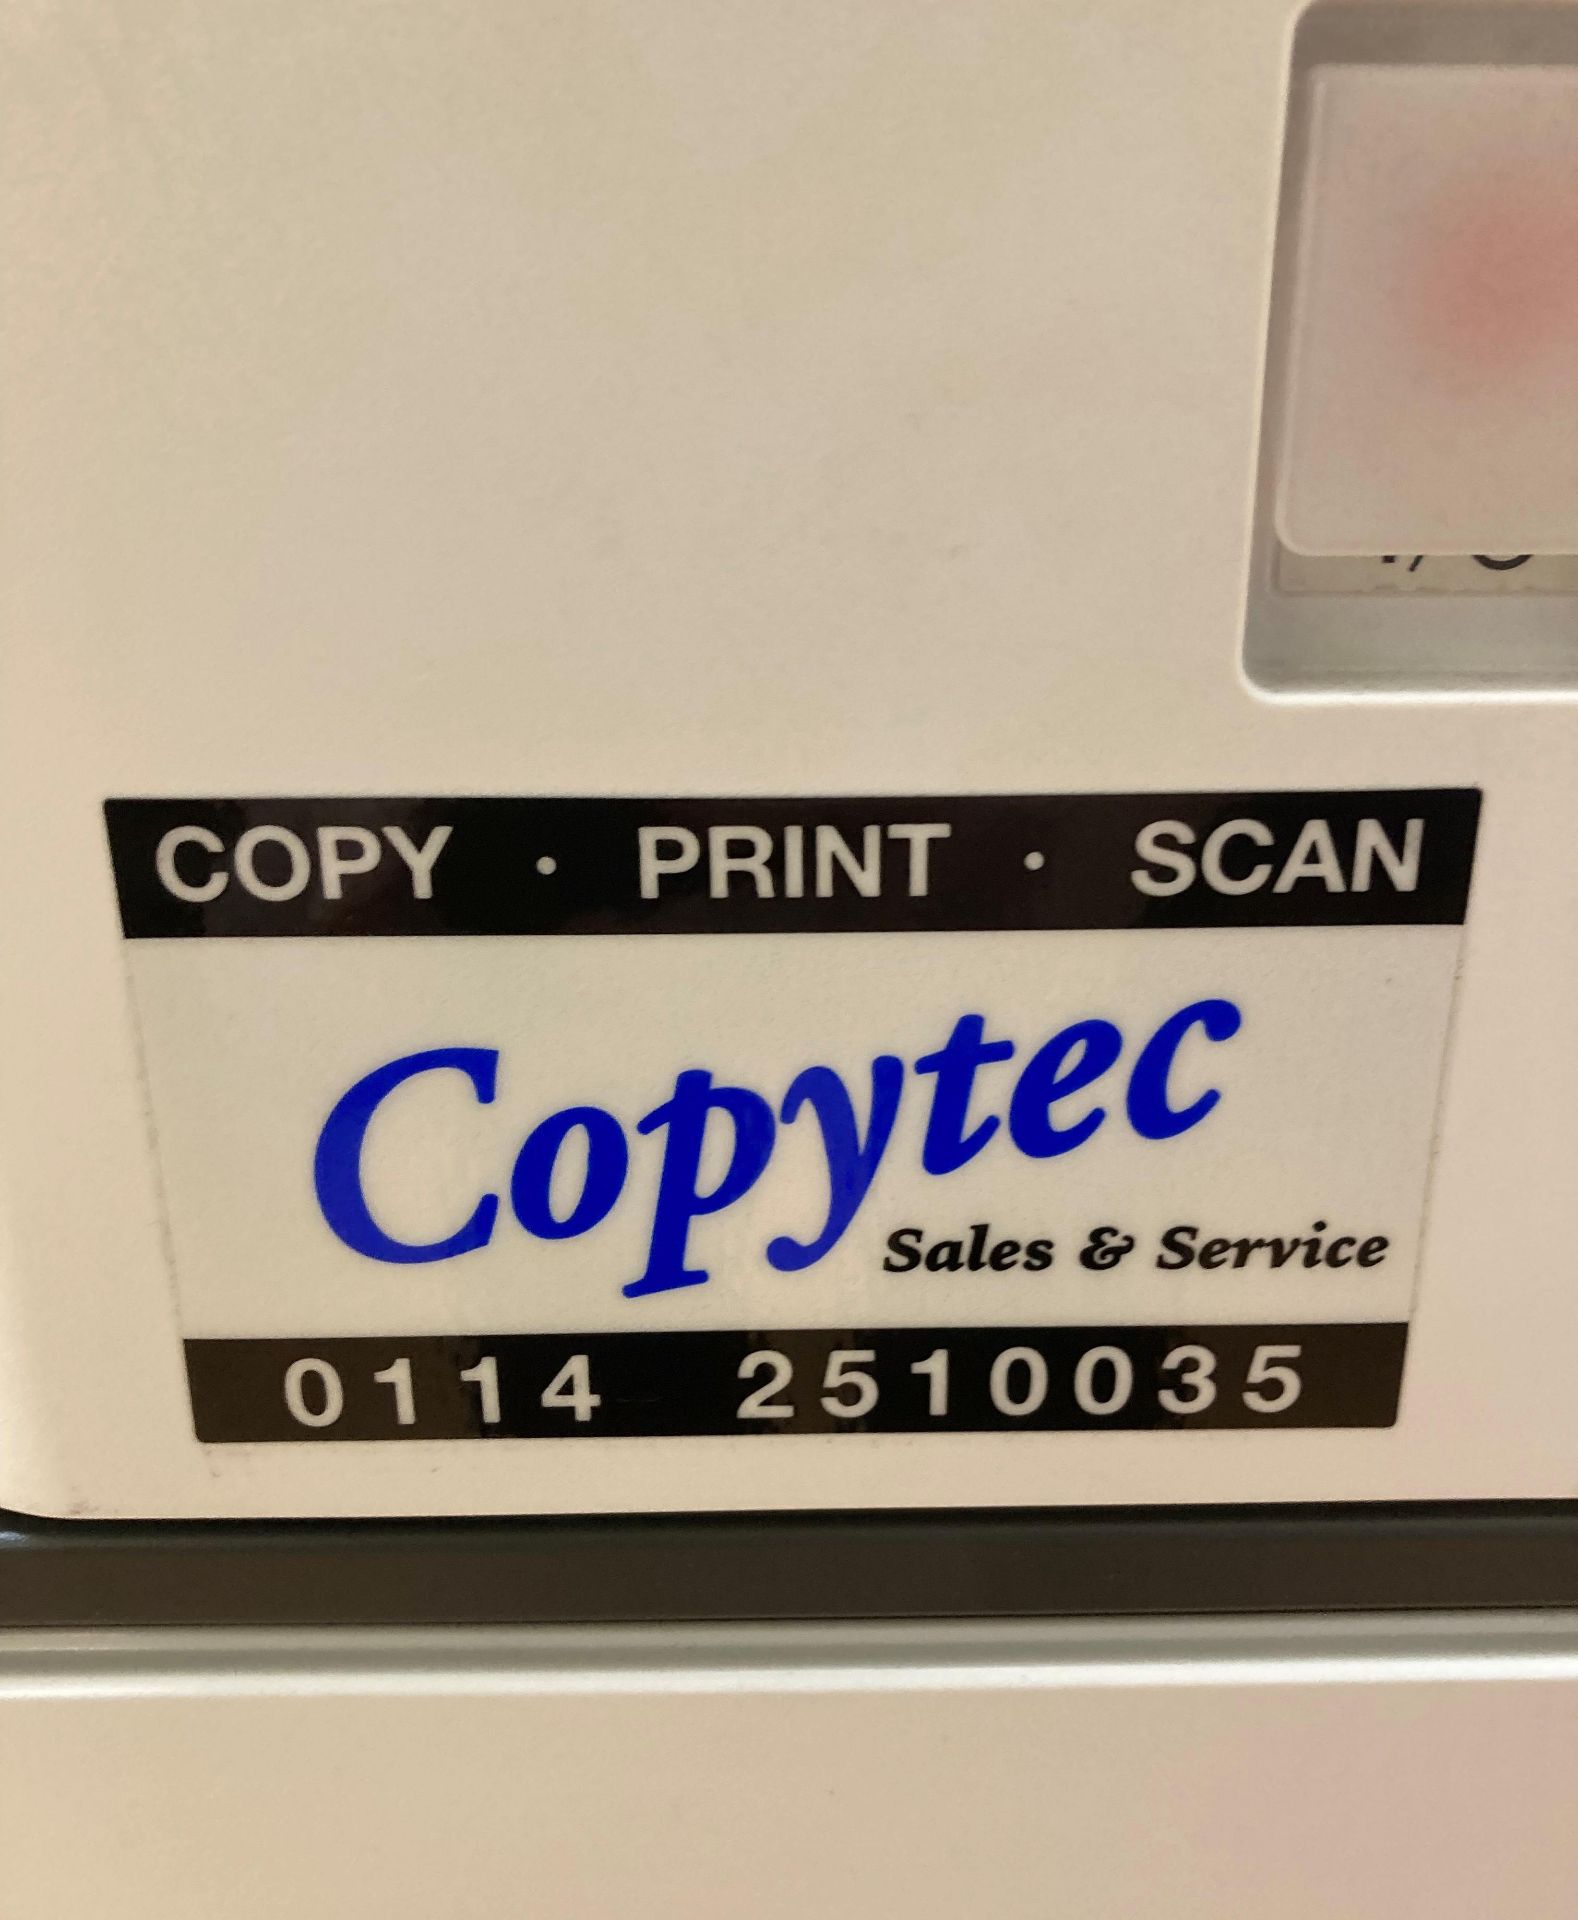 Ricoh MP C3003 copy print scan photocopier (collection address: Unit 6A, Church Street, Mexborough, - Image 3 of 3